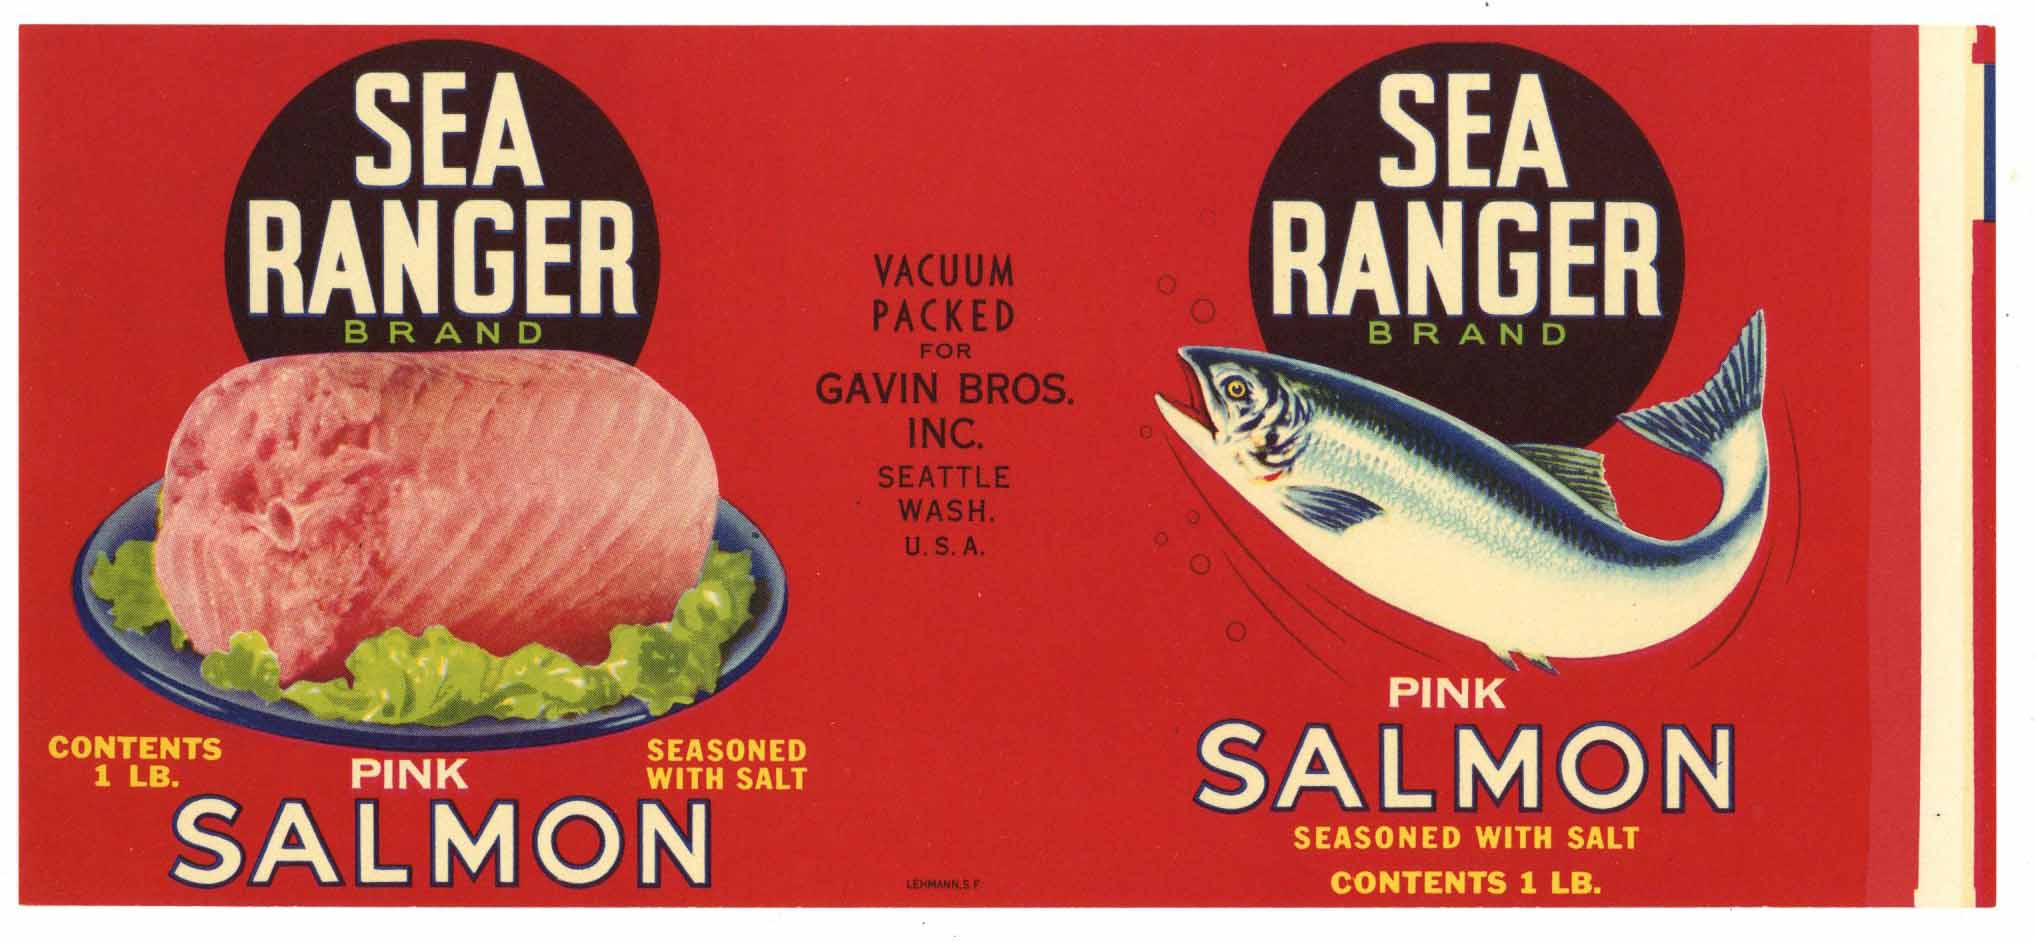 Sea Ranger Brand Vintage Seattle Salmon Can Label